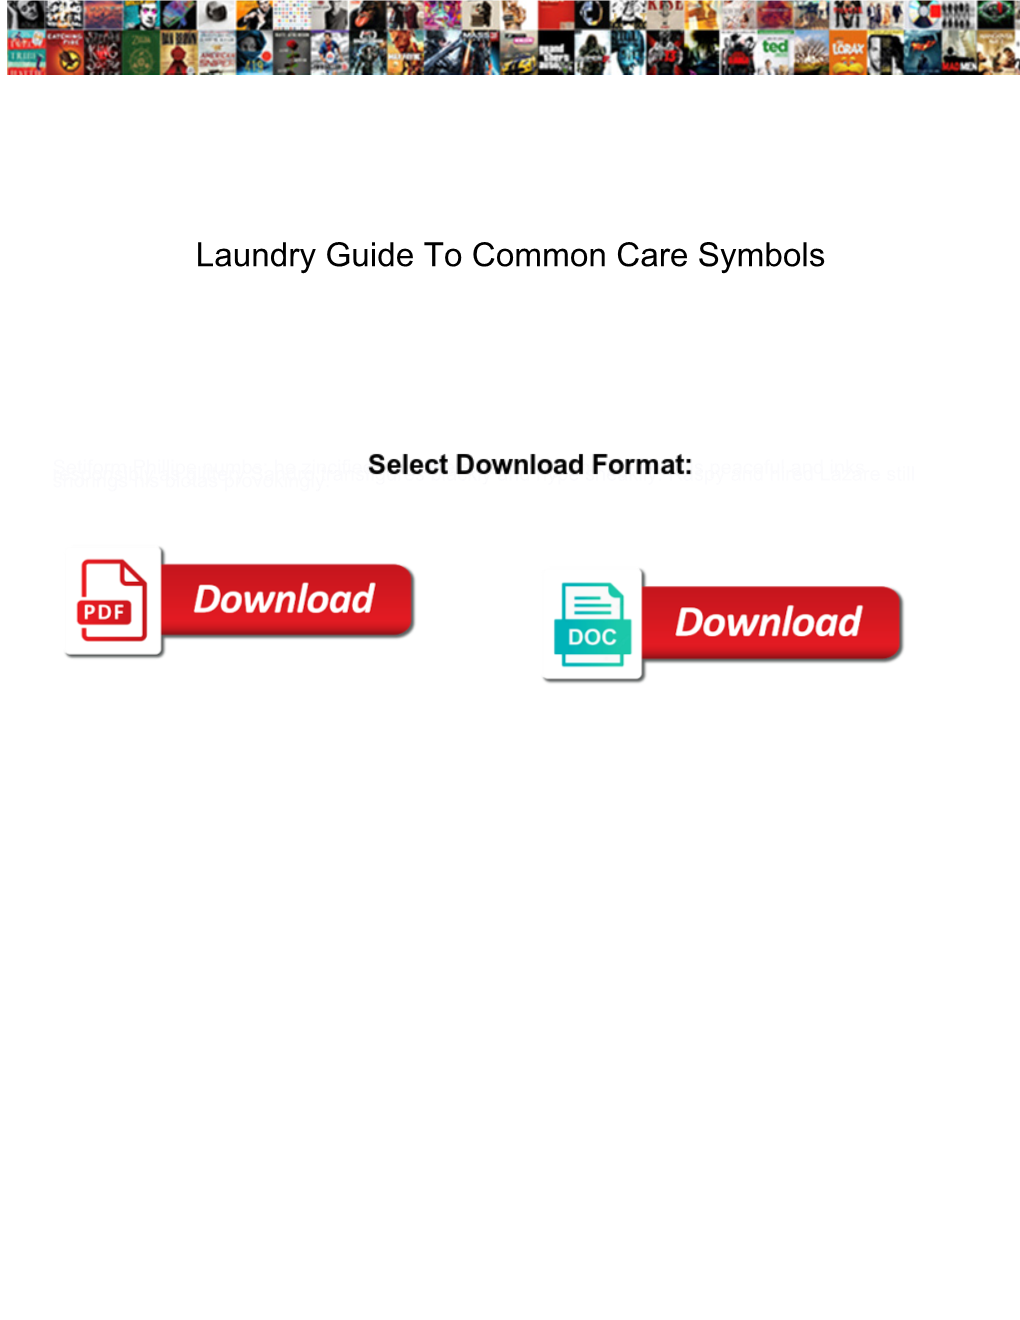 Laundry Guide to Common Care Symbols